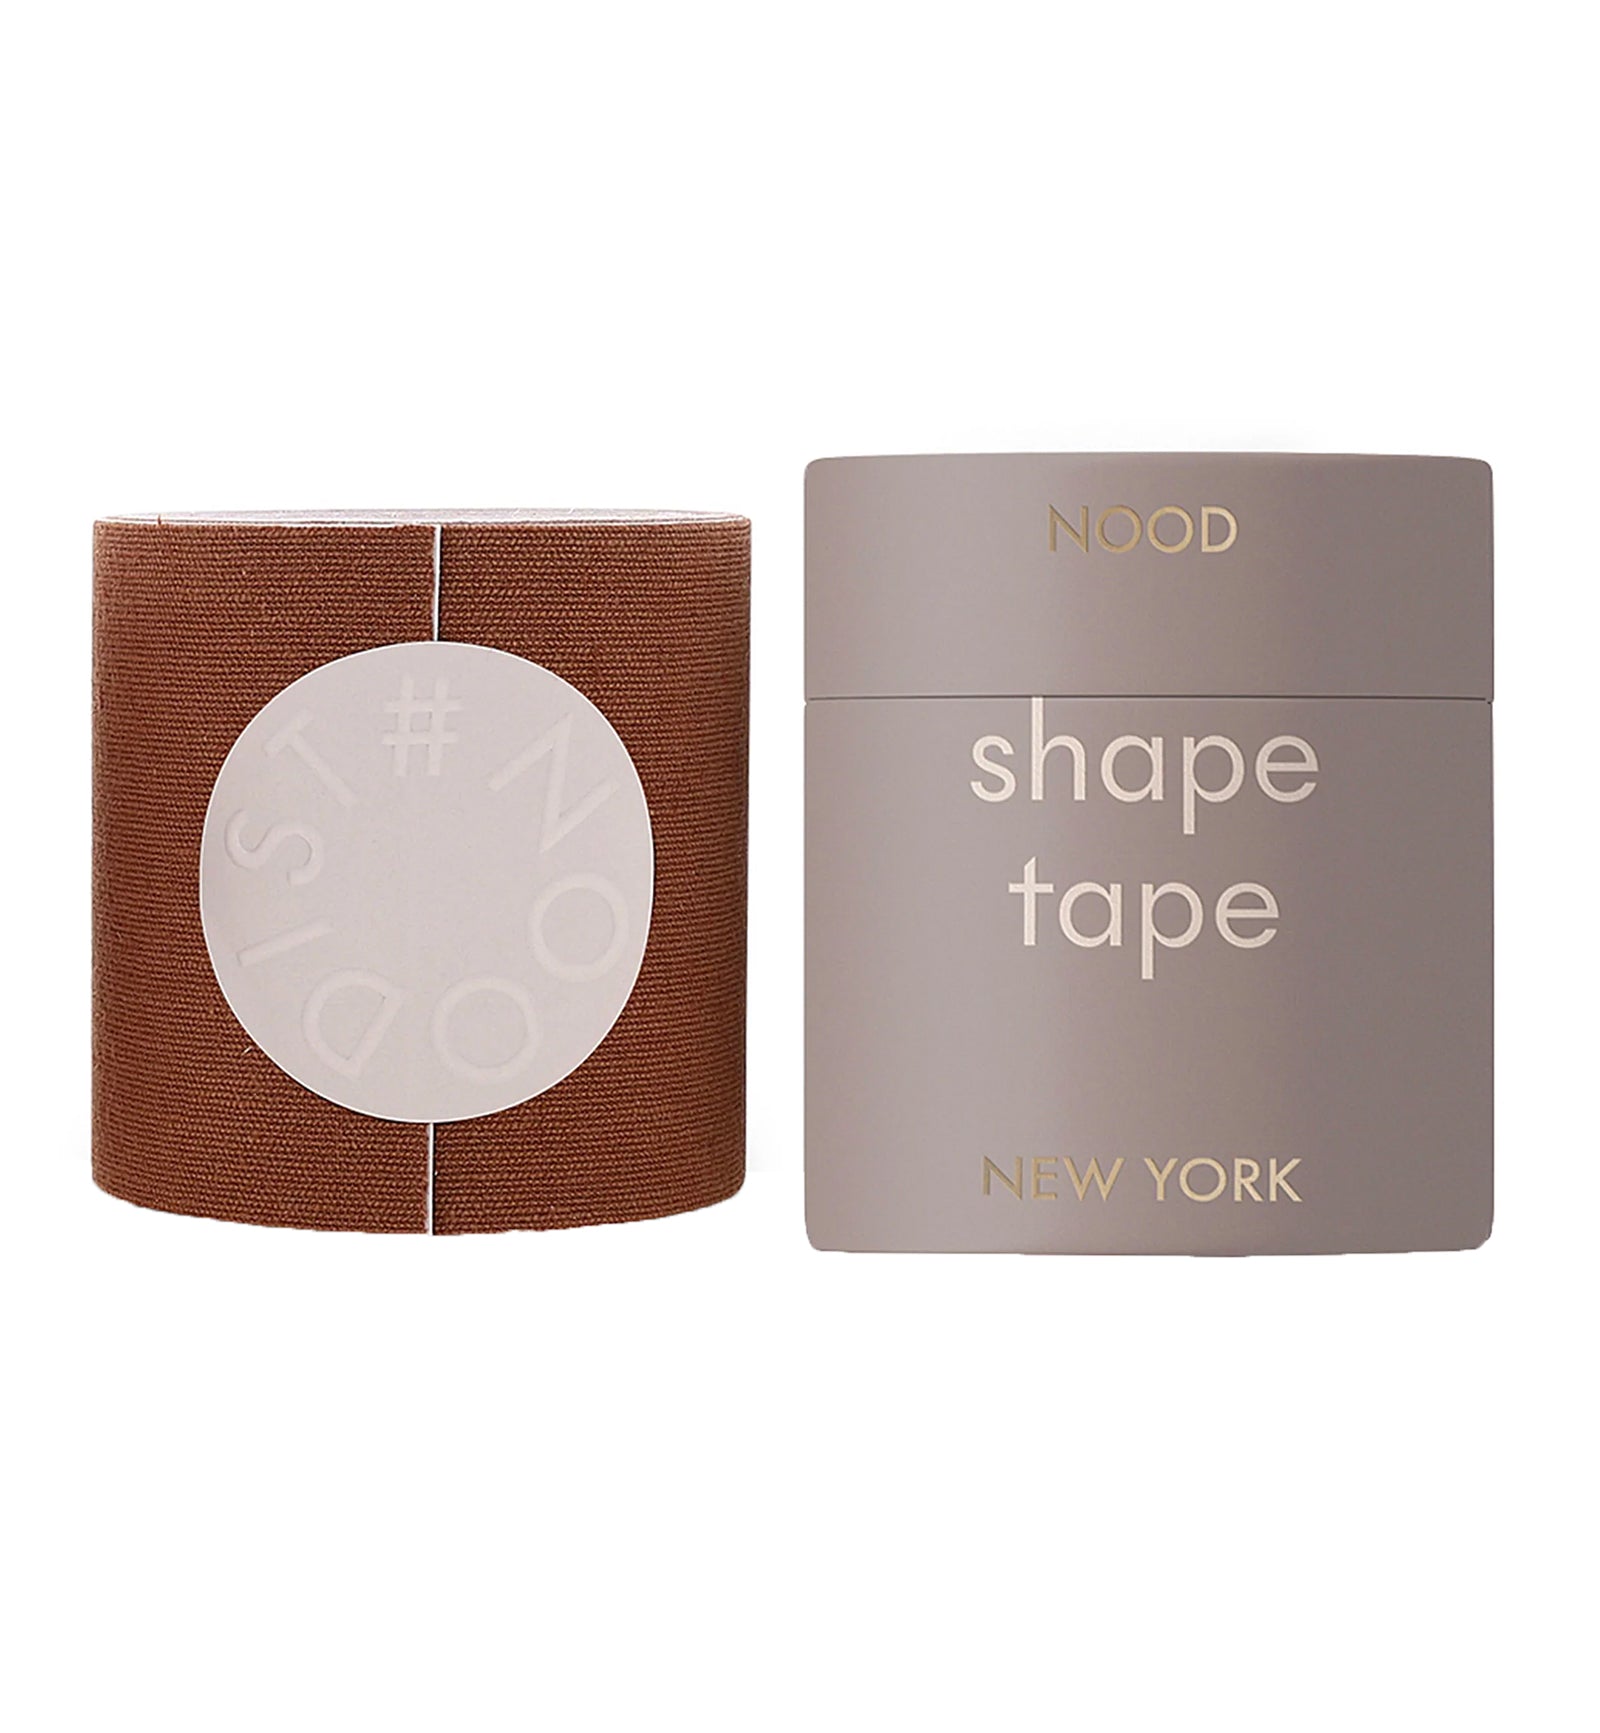 NOOD Shape Tape Breast Tape (16 ft Roll), Nood 7 - Nood 7,1 Roll